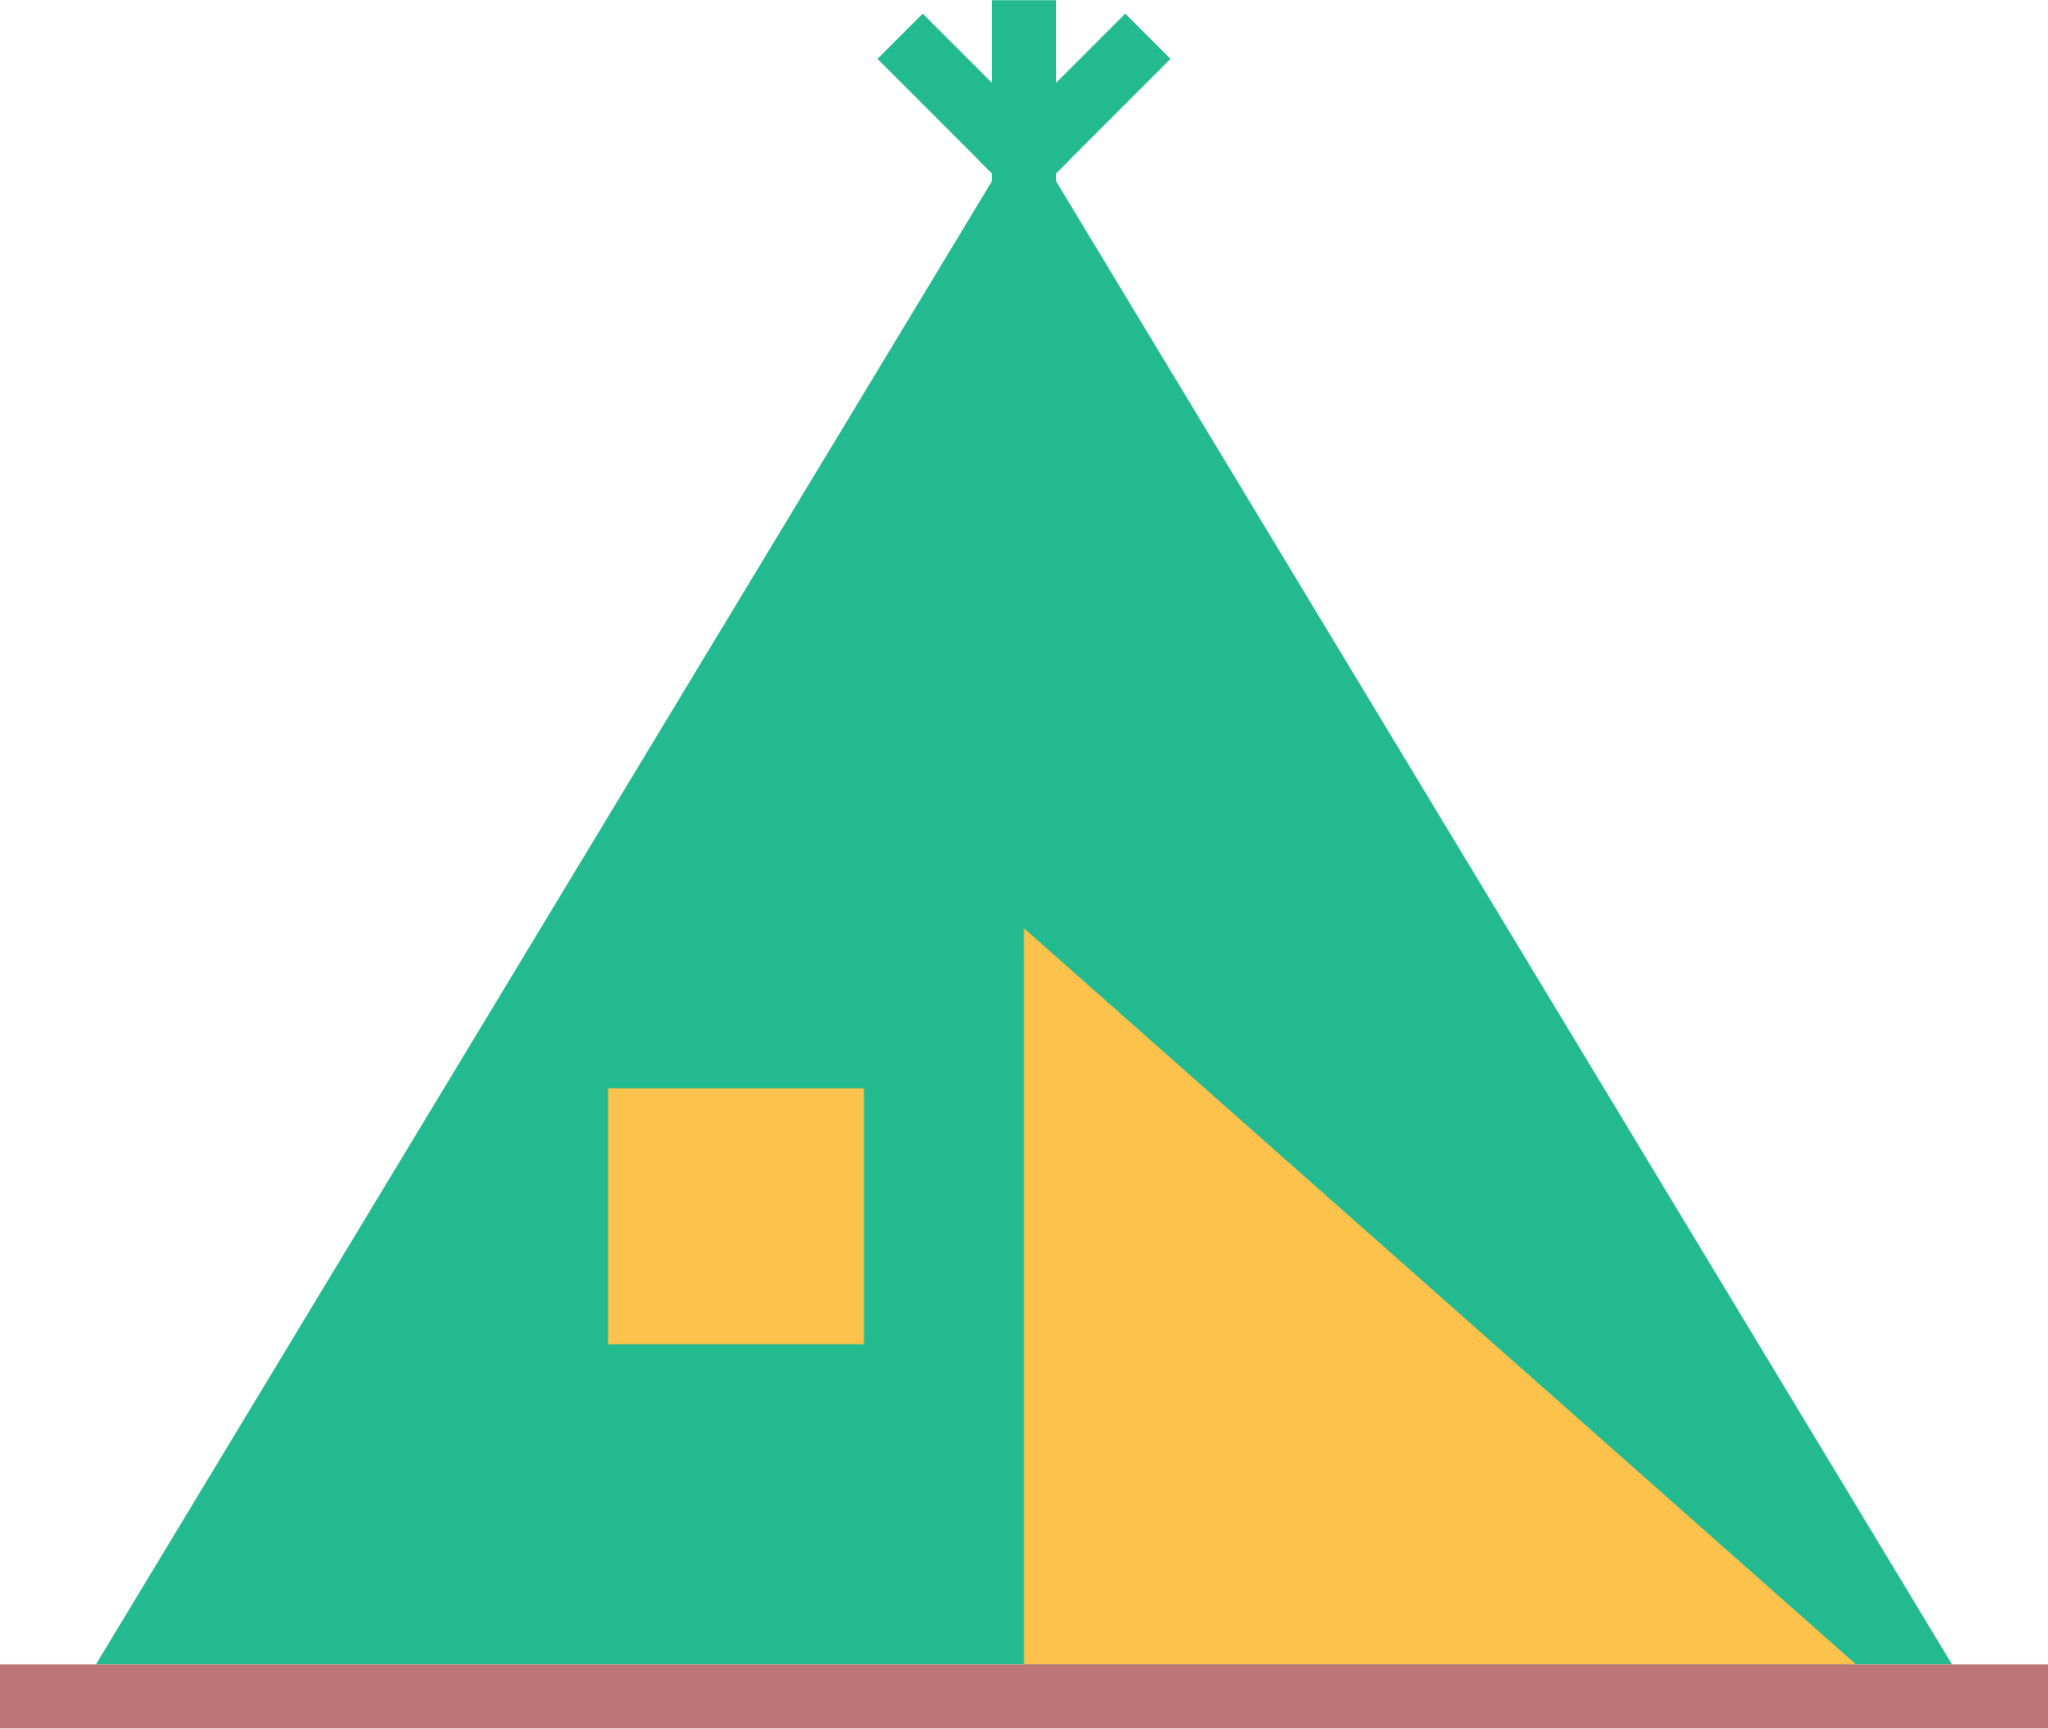 tent camp icon